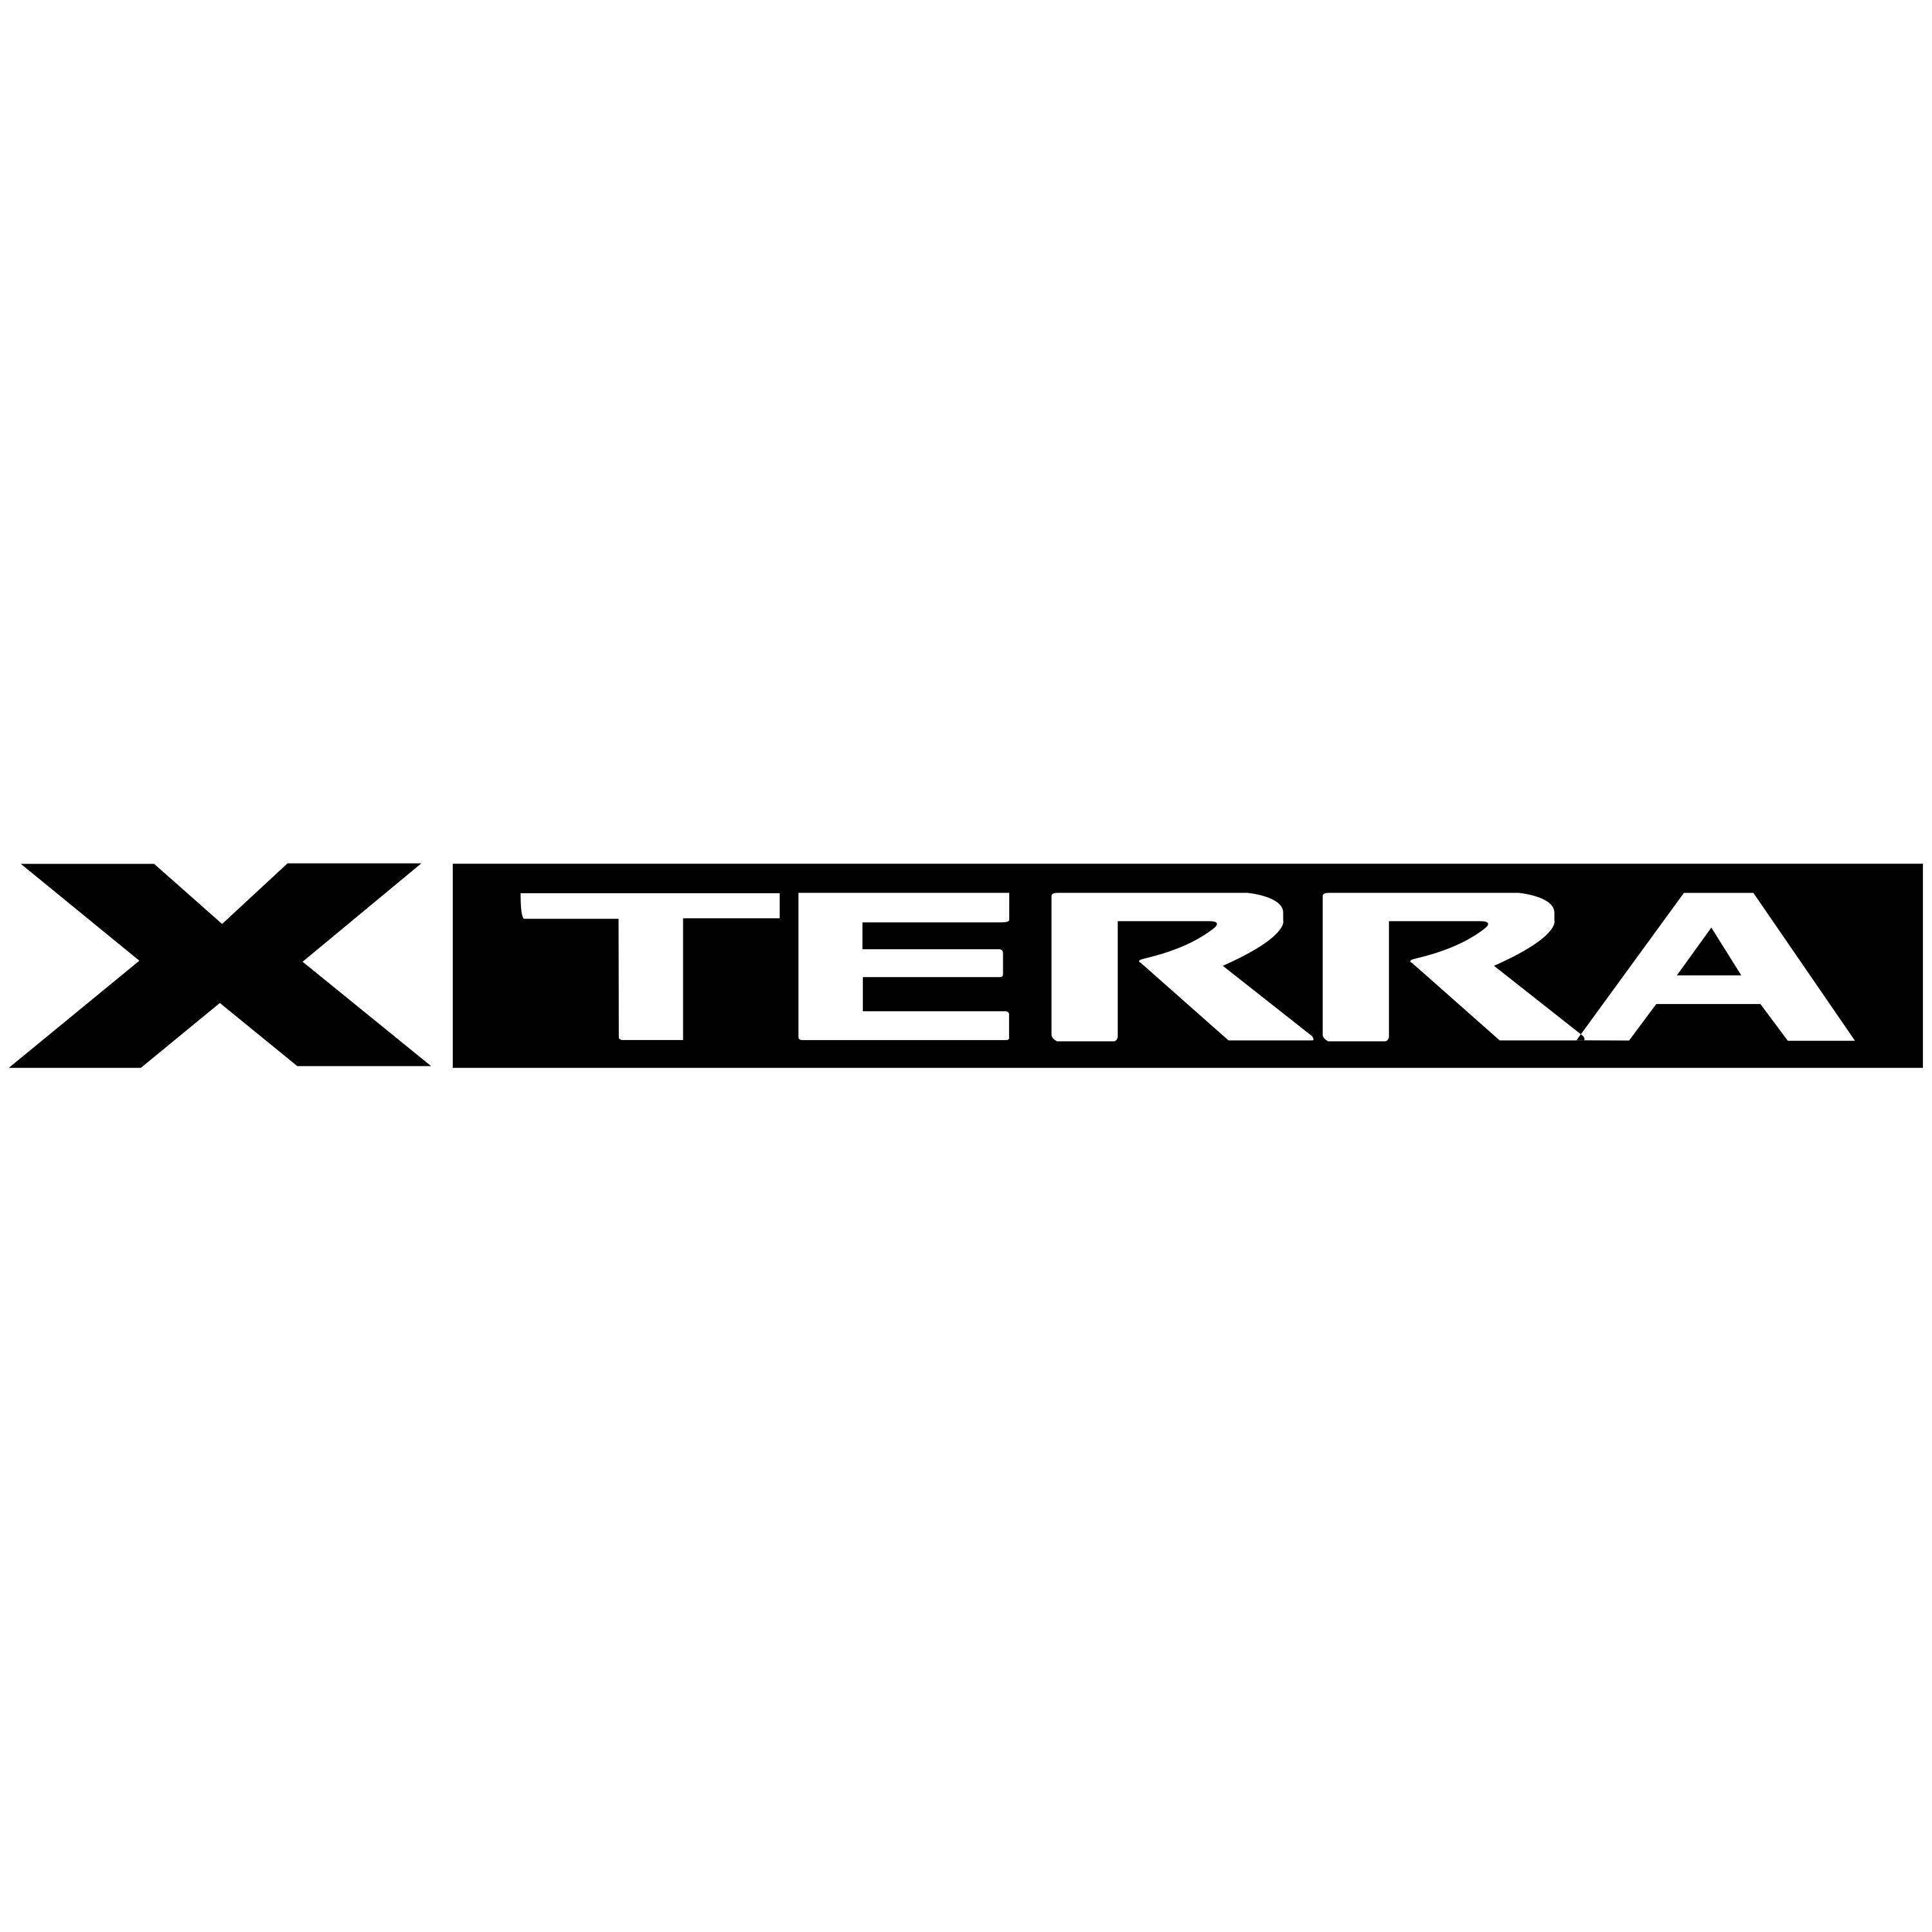 Xterra Logo  Transparent Image